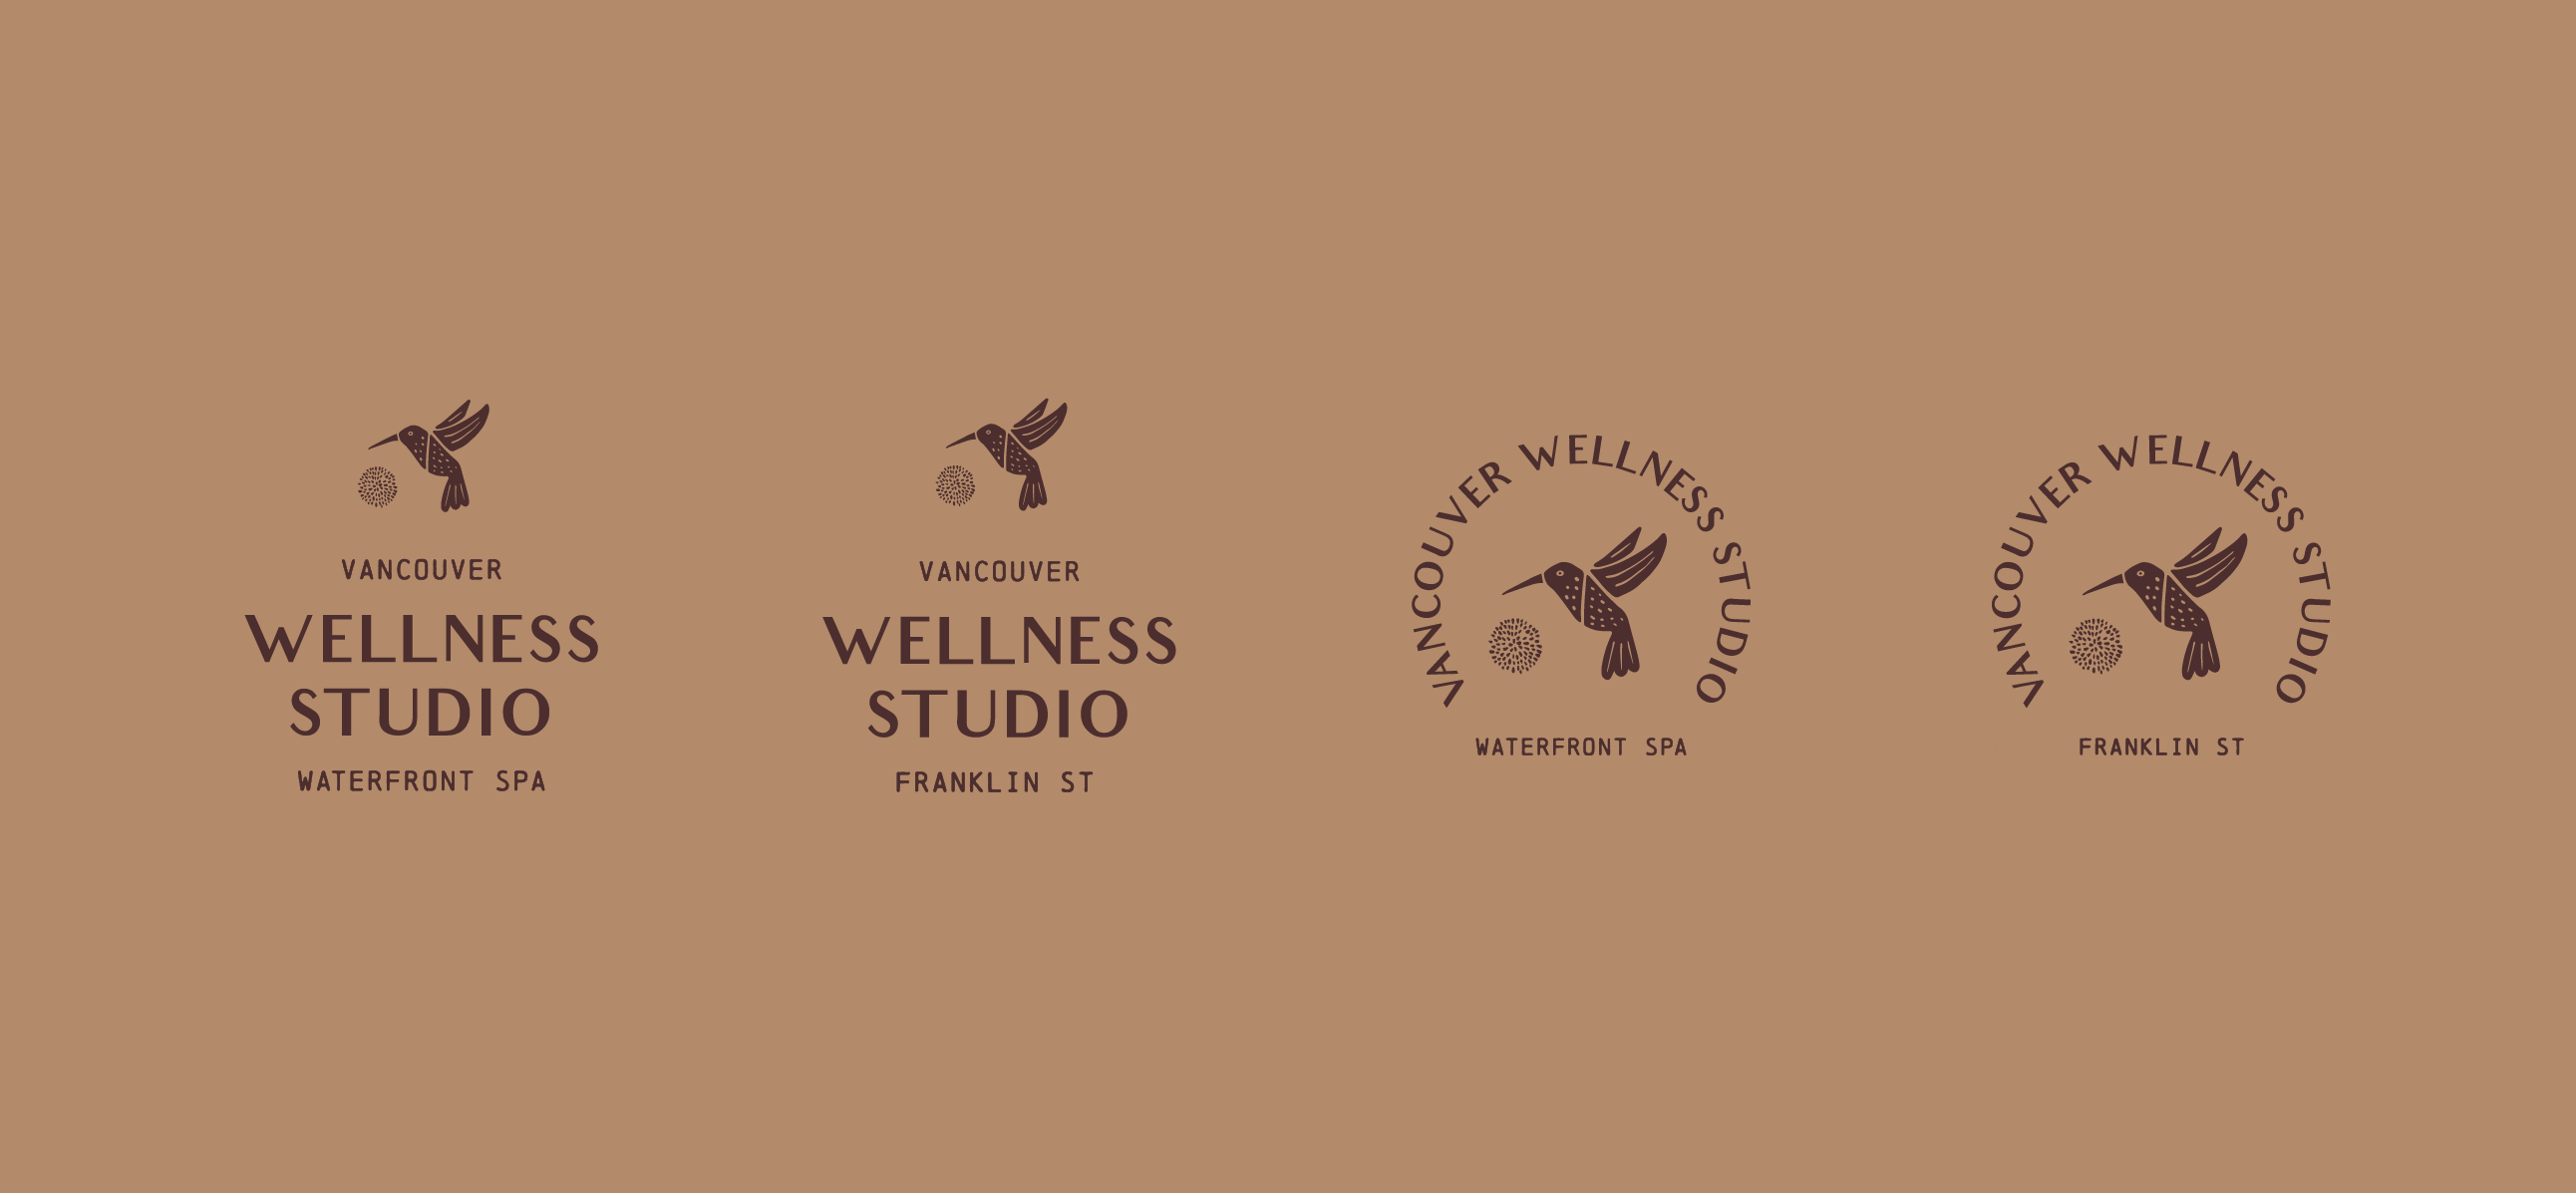 Vancouver Wellness Studio Branding 3